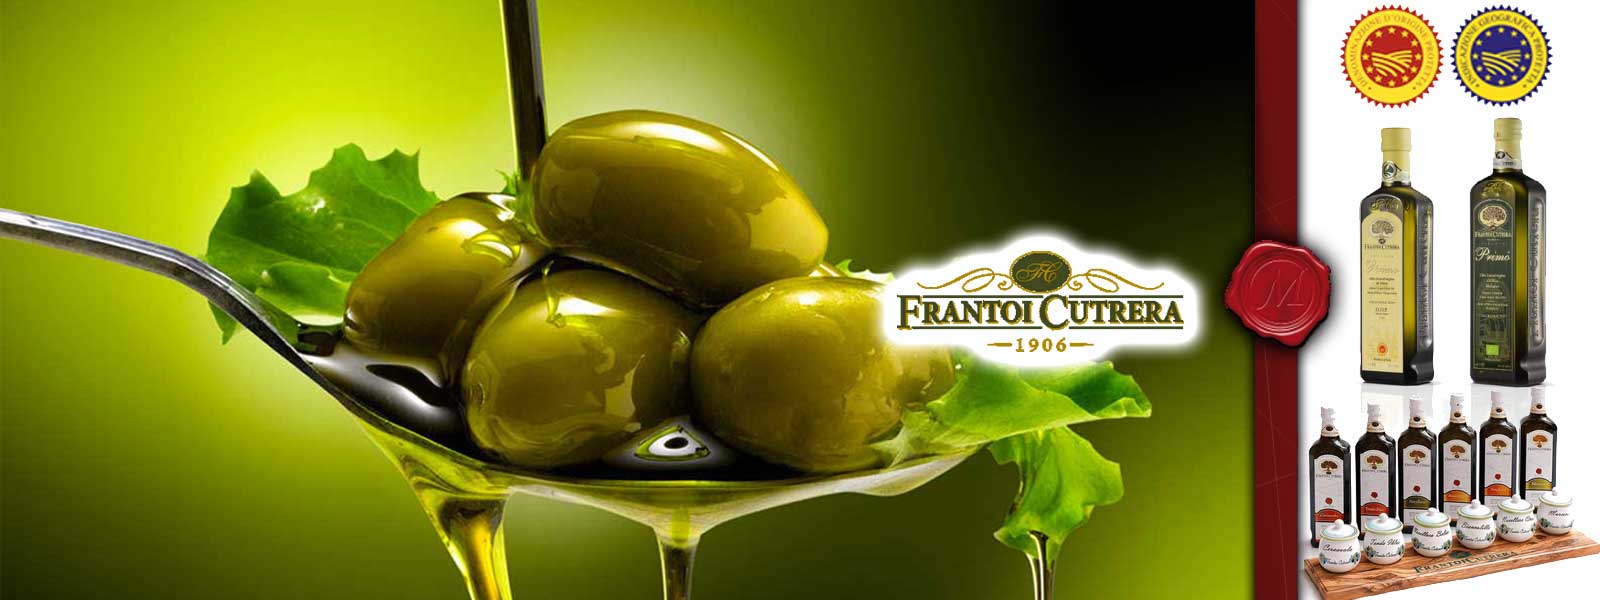 Olijfolie van Frantoi Cutrera 